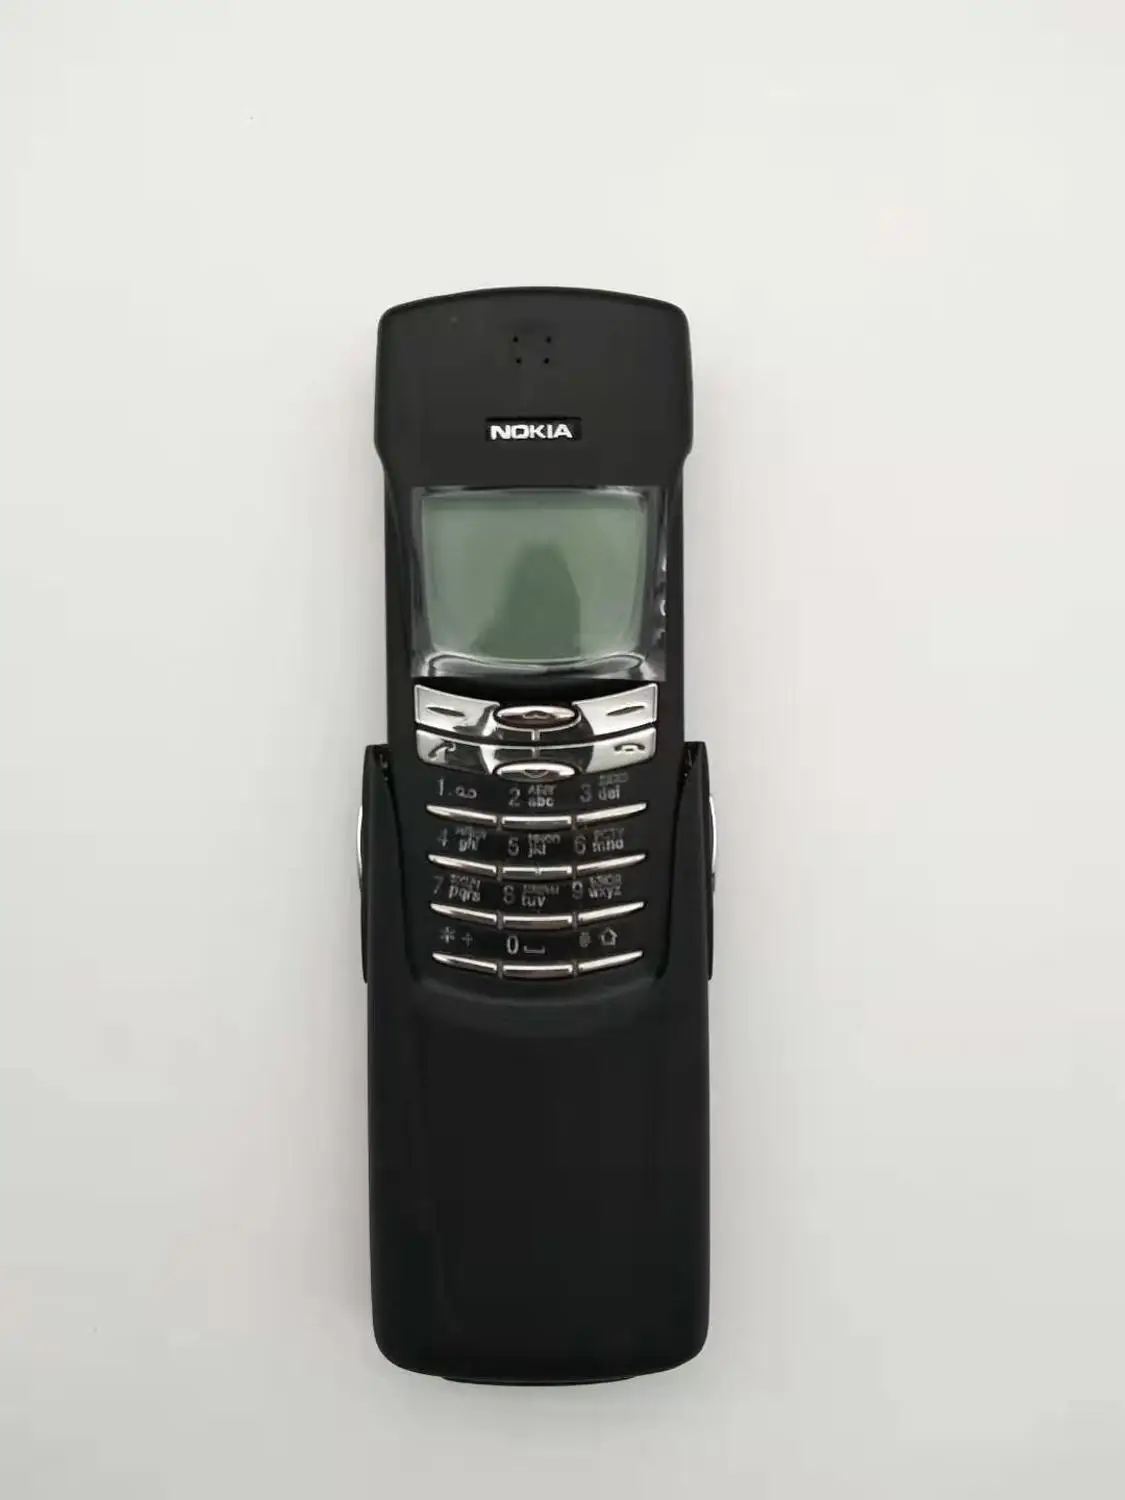 nokia 8910 refurbished original nokia 8910 mobile phone 2g gsm 9001800 unlocked phone one year warranty refurbished free global shipping